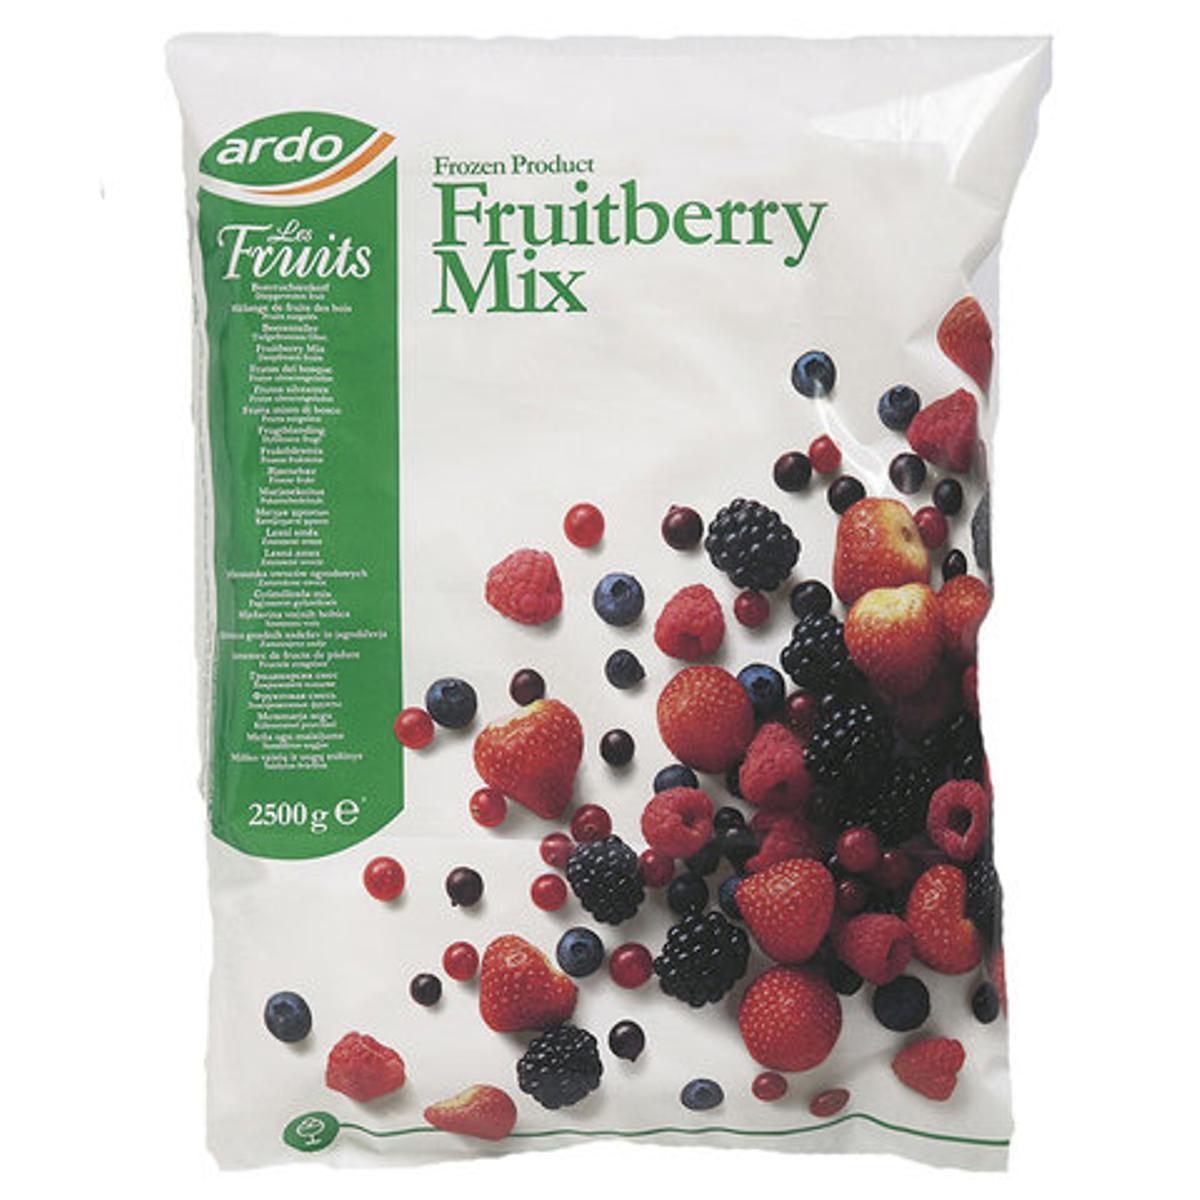 Alerta sanitaria: Fruitberry mix de 2,5 kg de Ardo